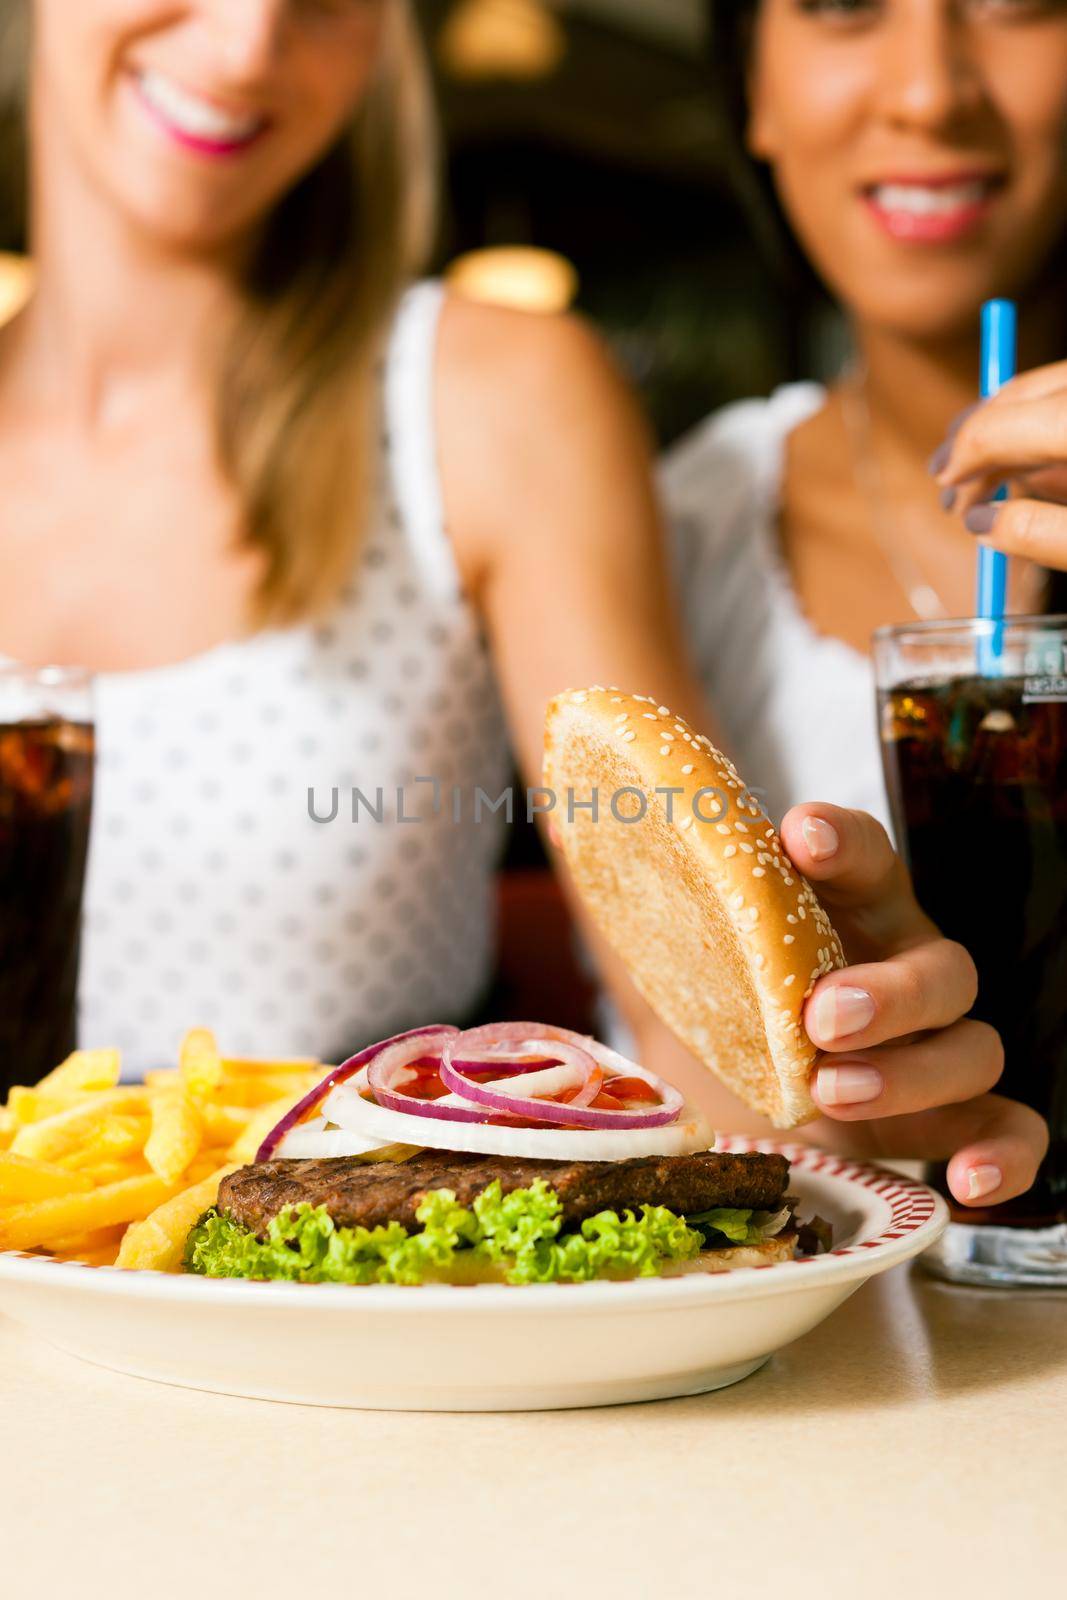 Two women eating hamburger and drinking soda by Kzenon